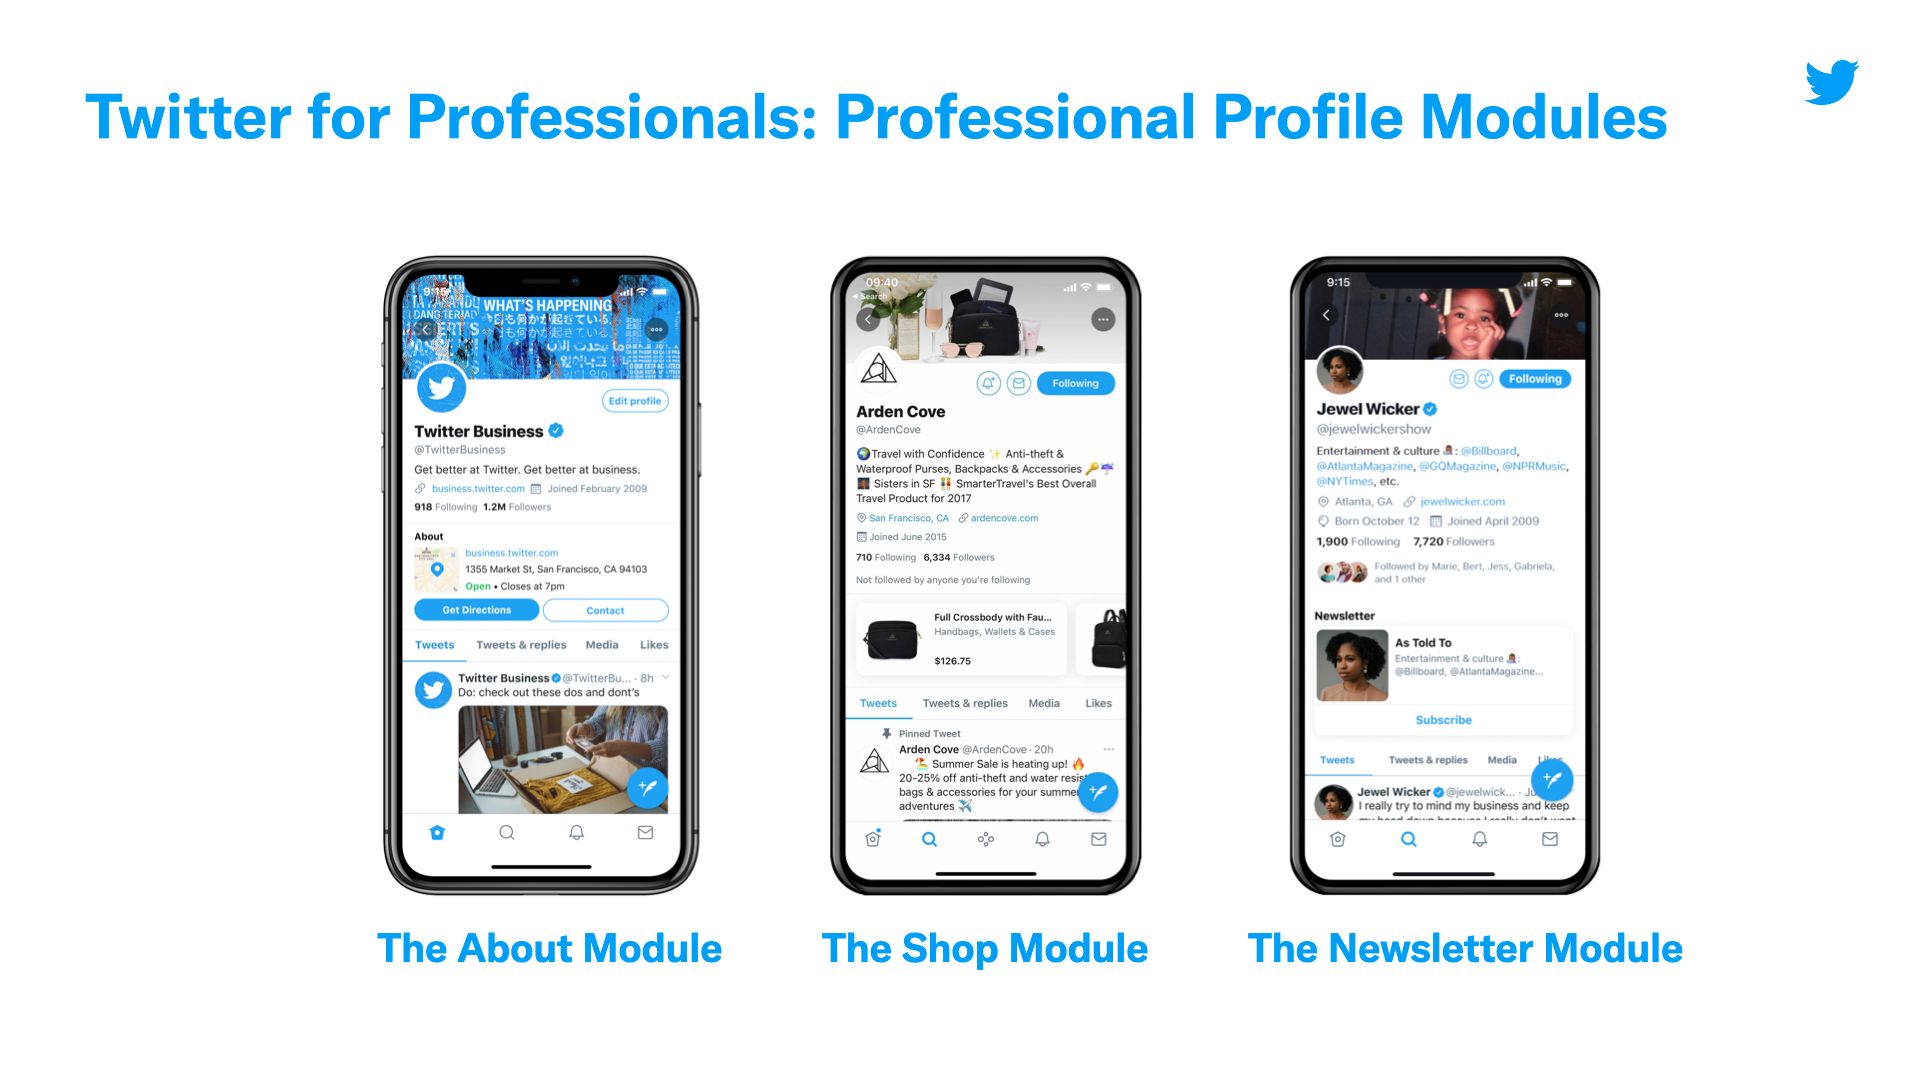 Professional Profile Modules